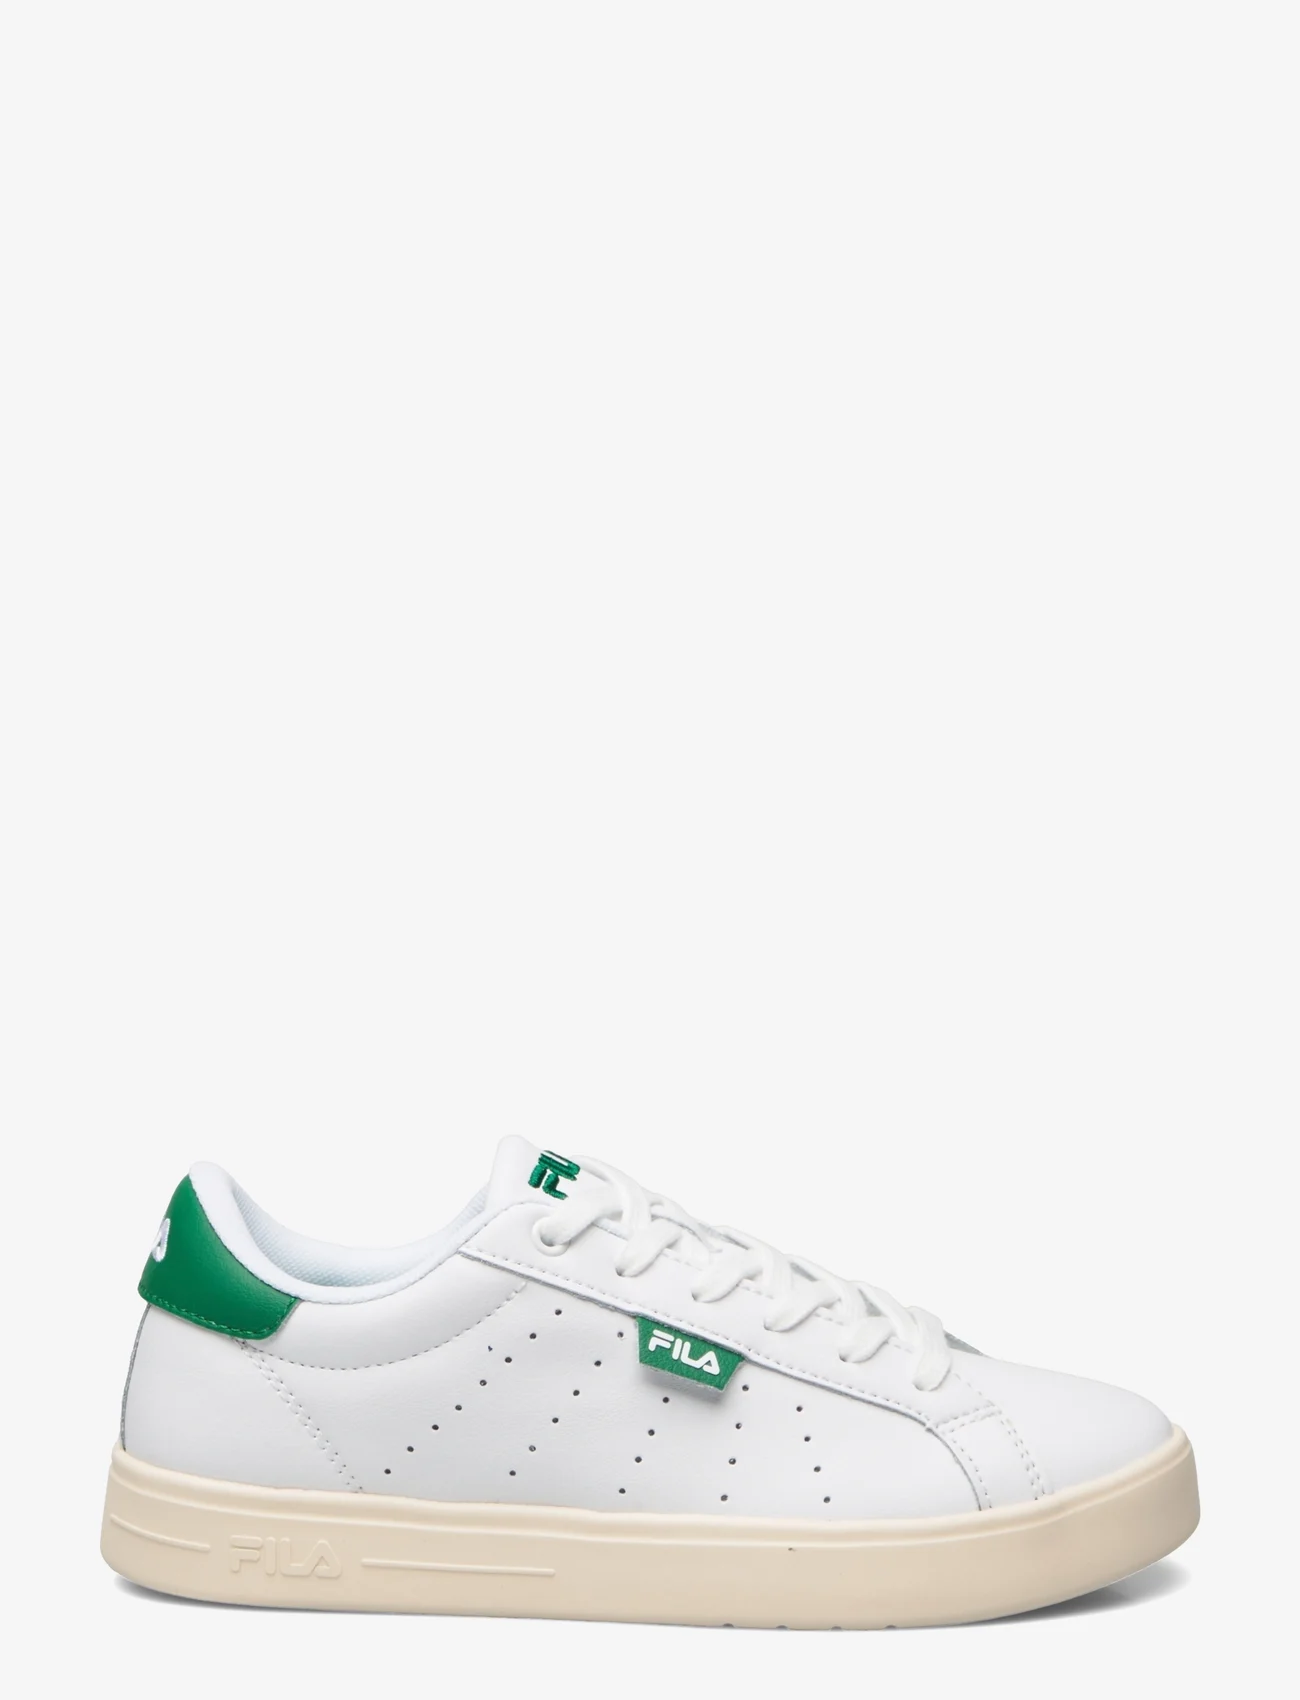 FILA - FILA LUSSO CB wmn - low top sneakers - white-verdant green - 1